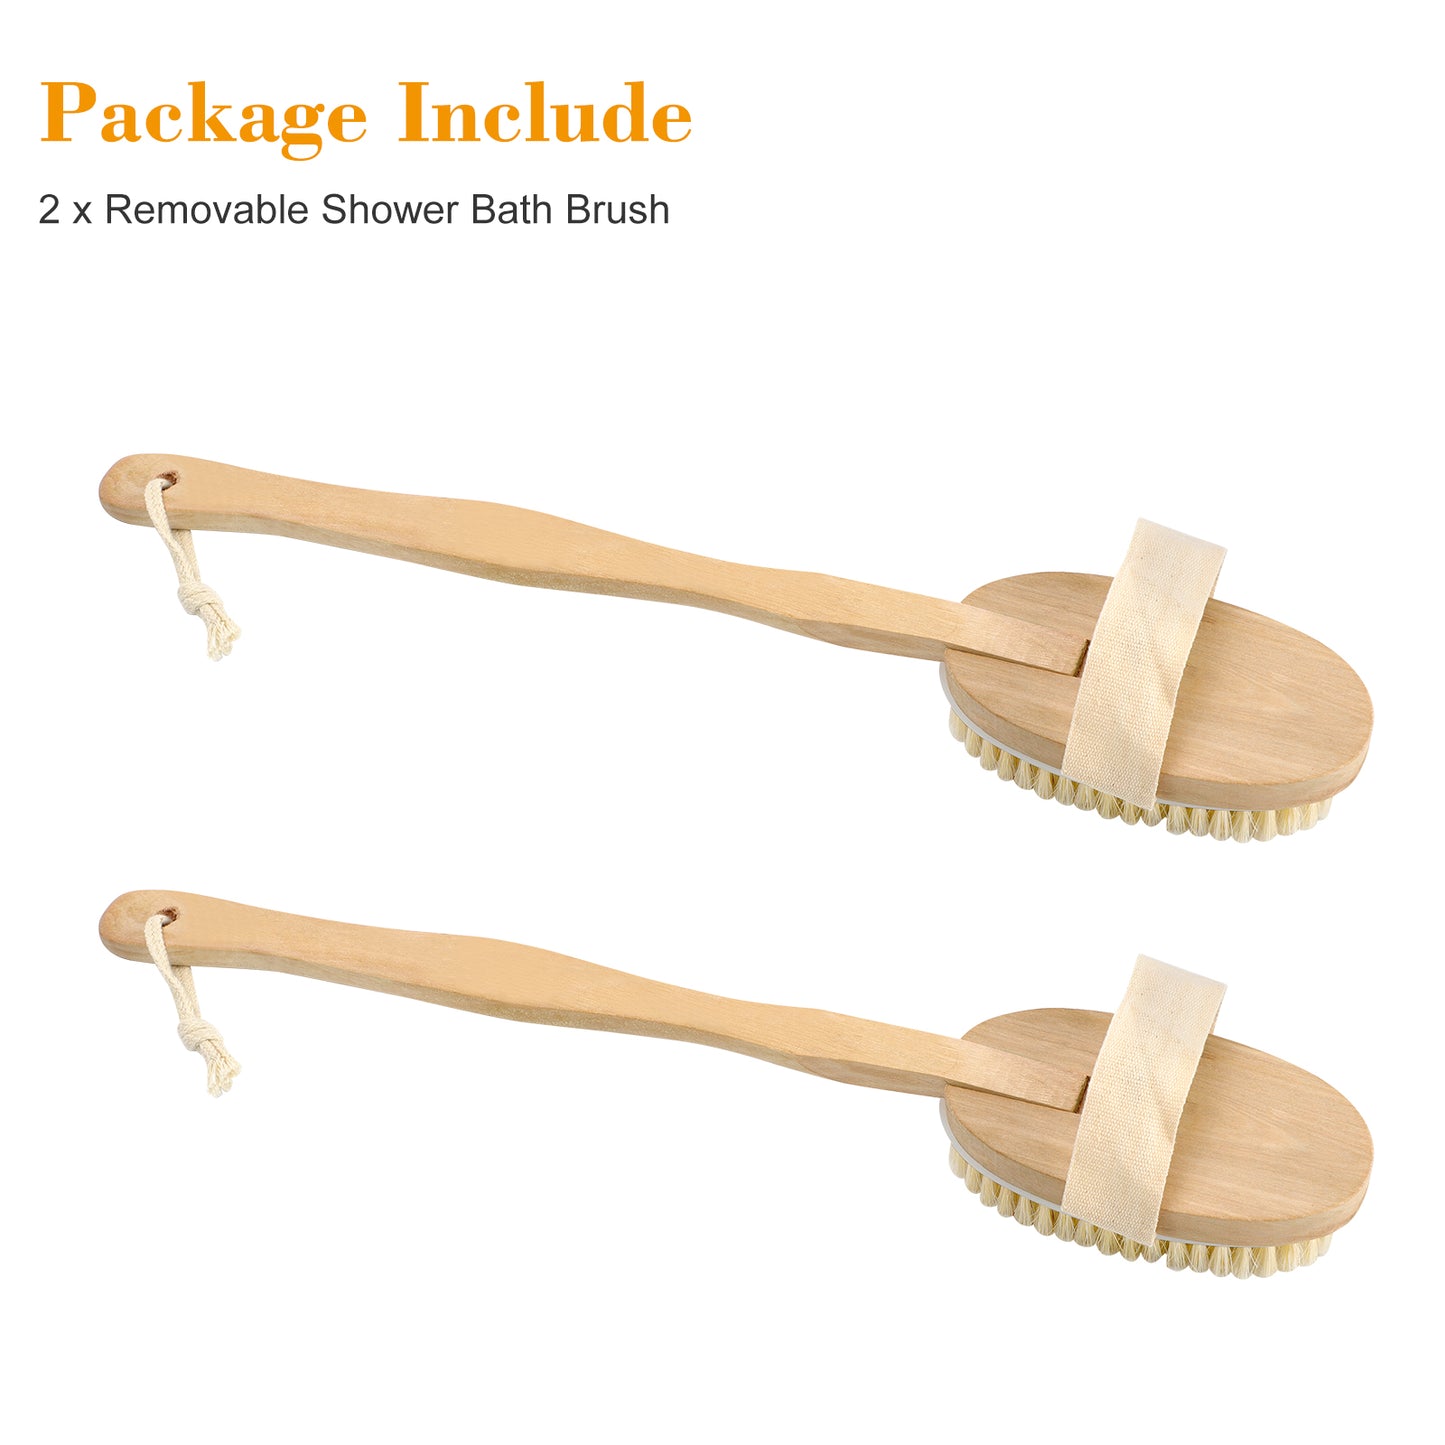 2Pcs Natural Wood Shower Bath Brush - Body Back Brush Bristles SPA Long Handle Scrub Massage Clean Bath Brush